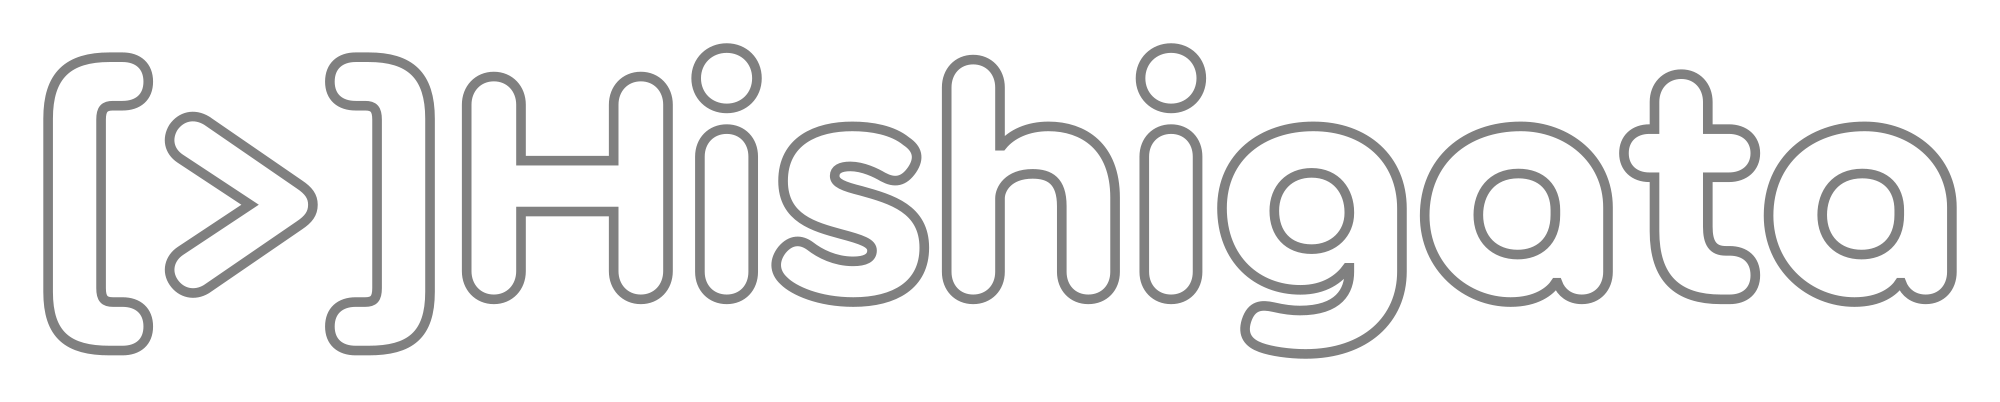 Hishigata logo